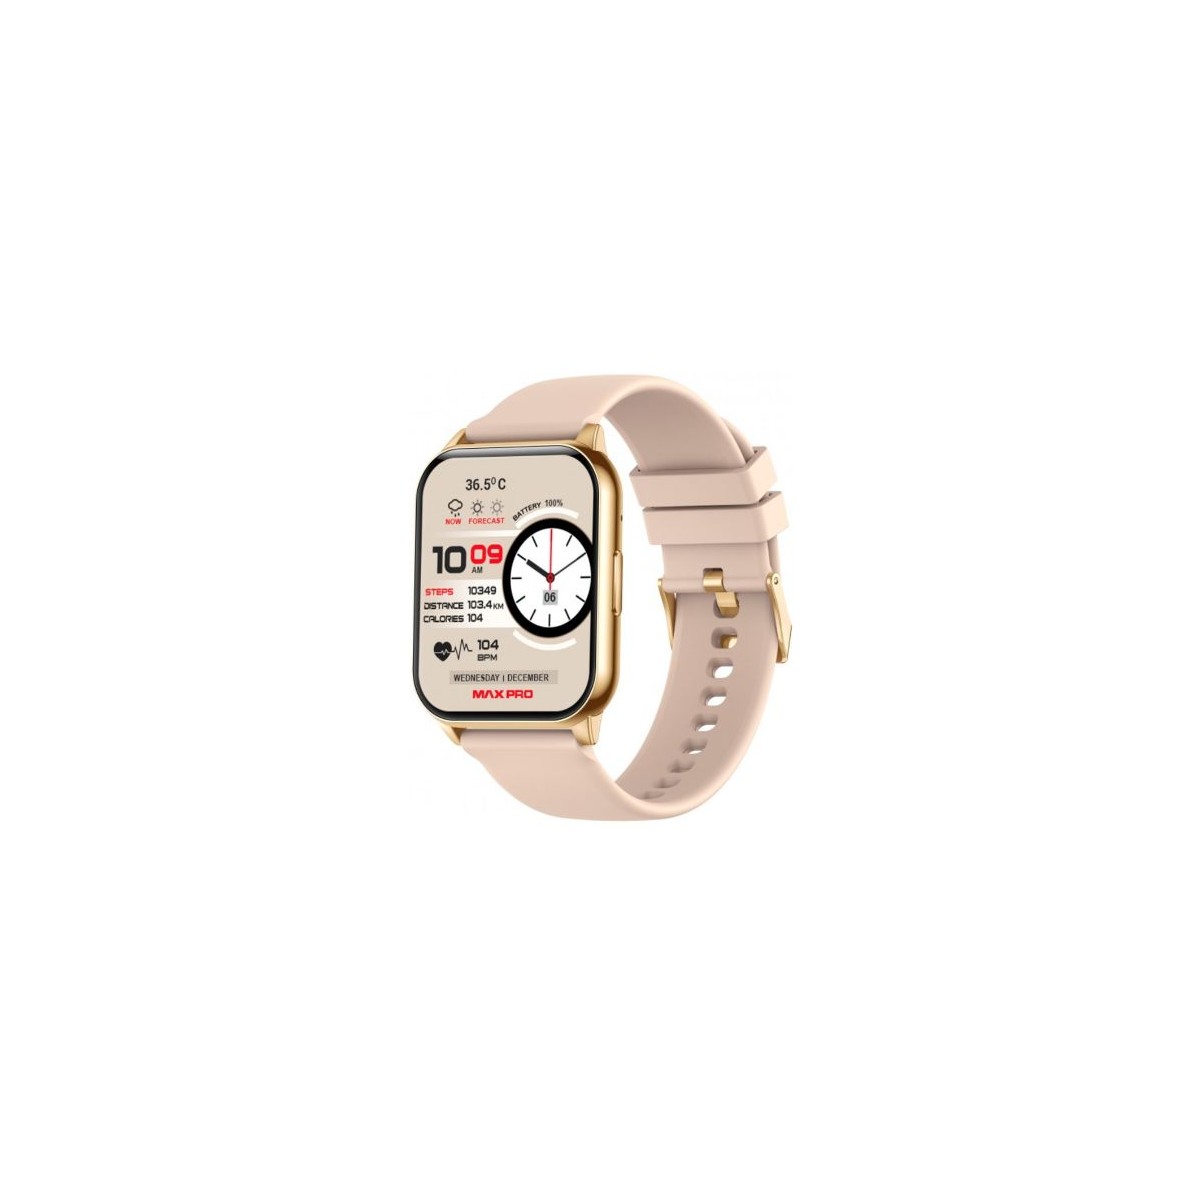 Smartwatch Maxcom FW25 Arsen Pro Gold